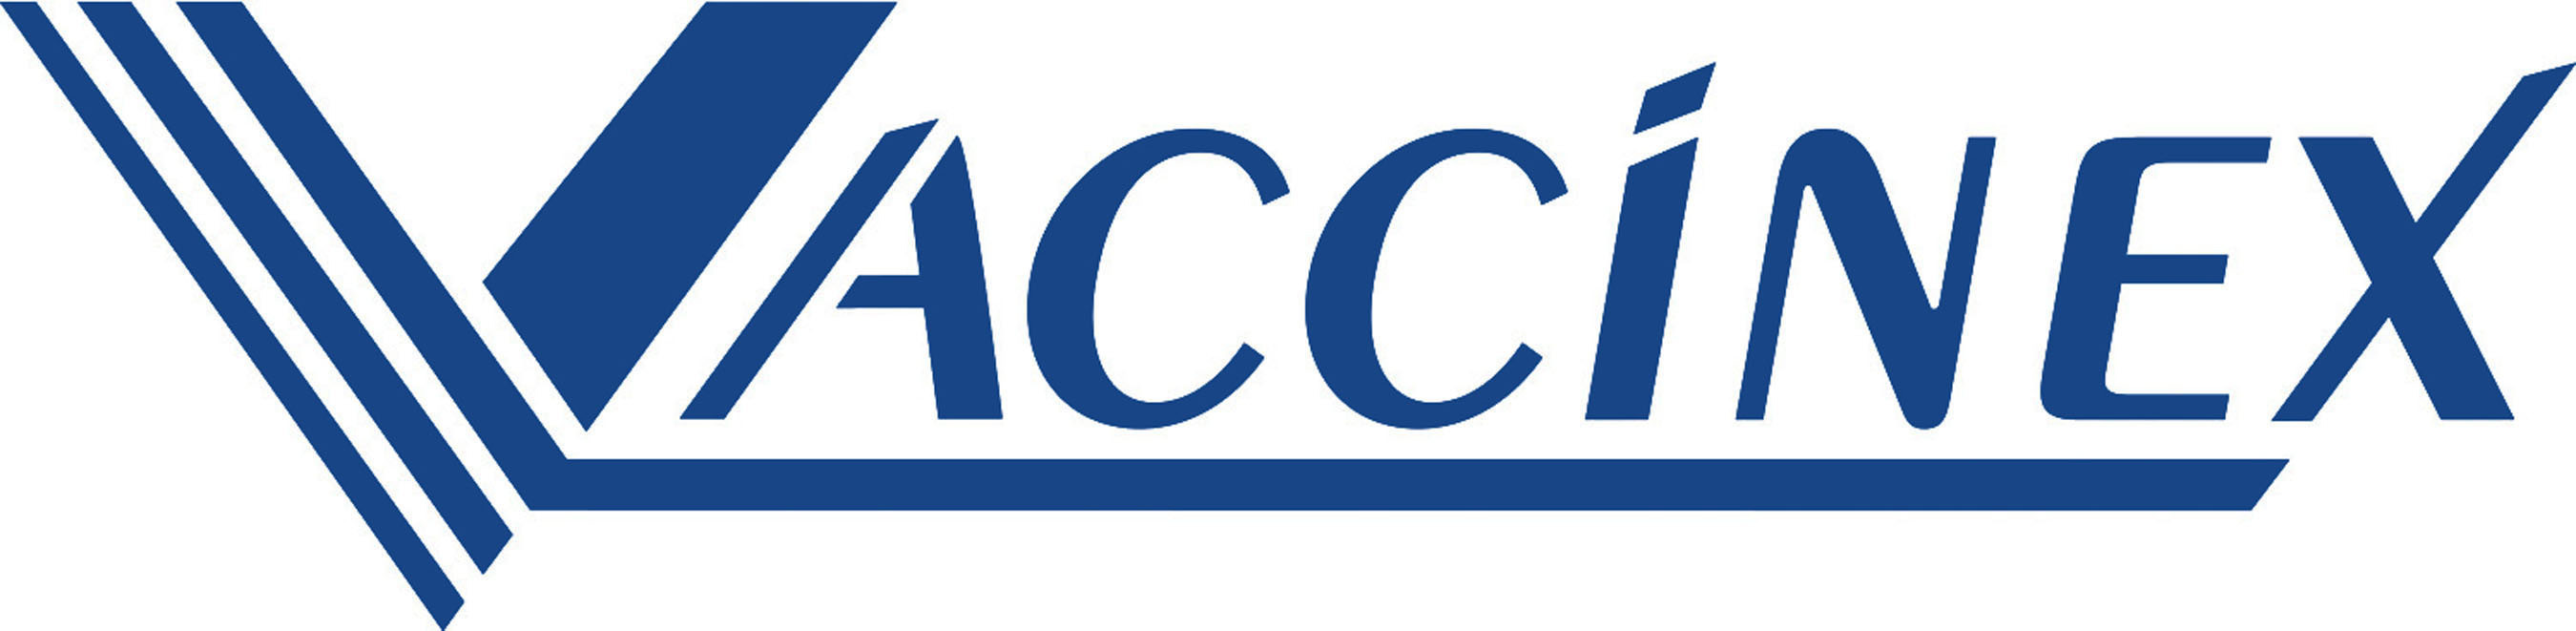 Vaccinex, Inc. Logo.